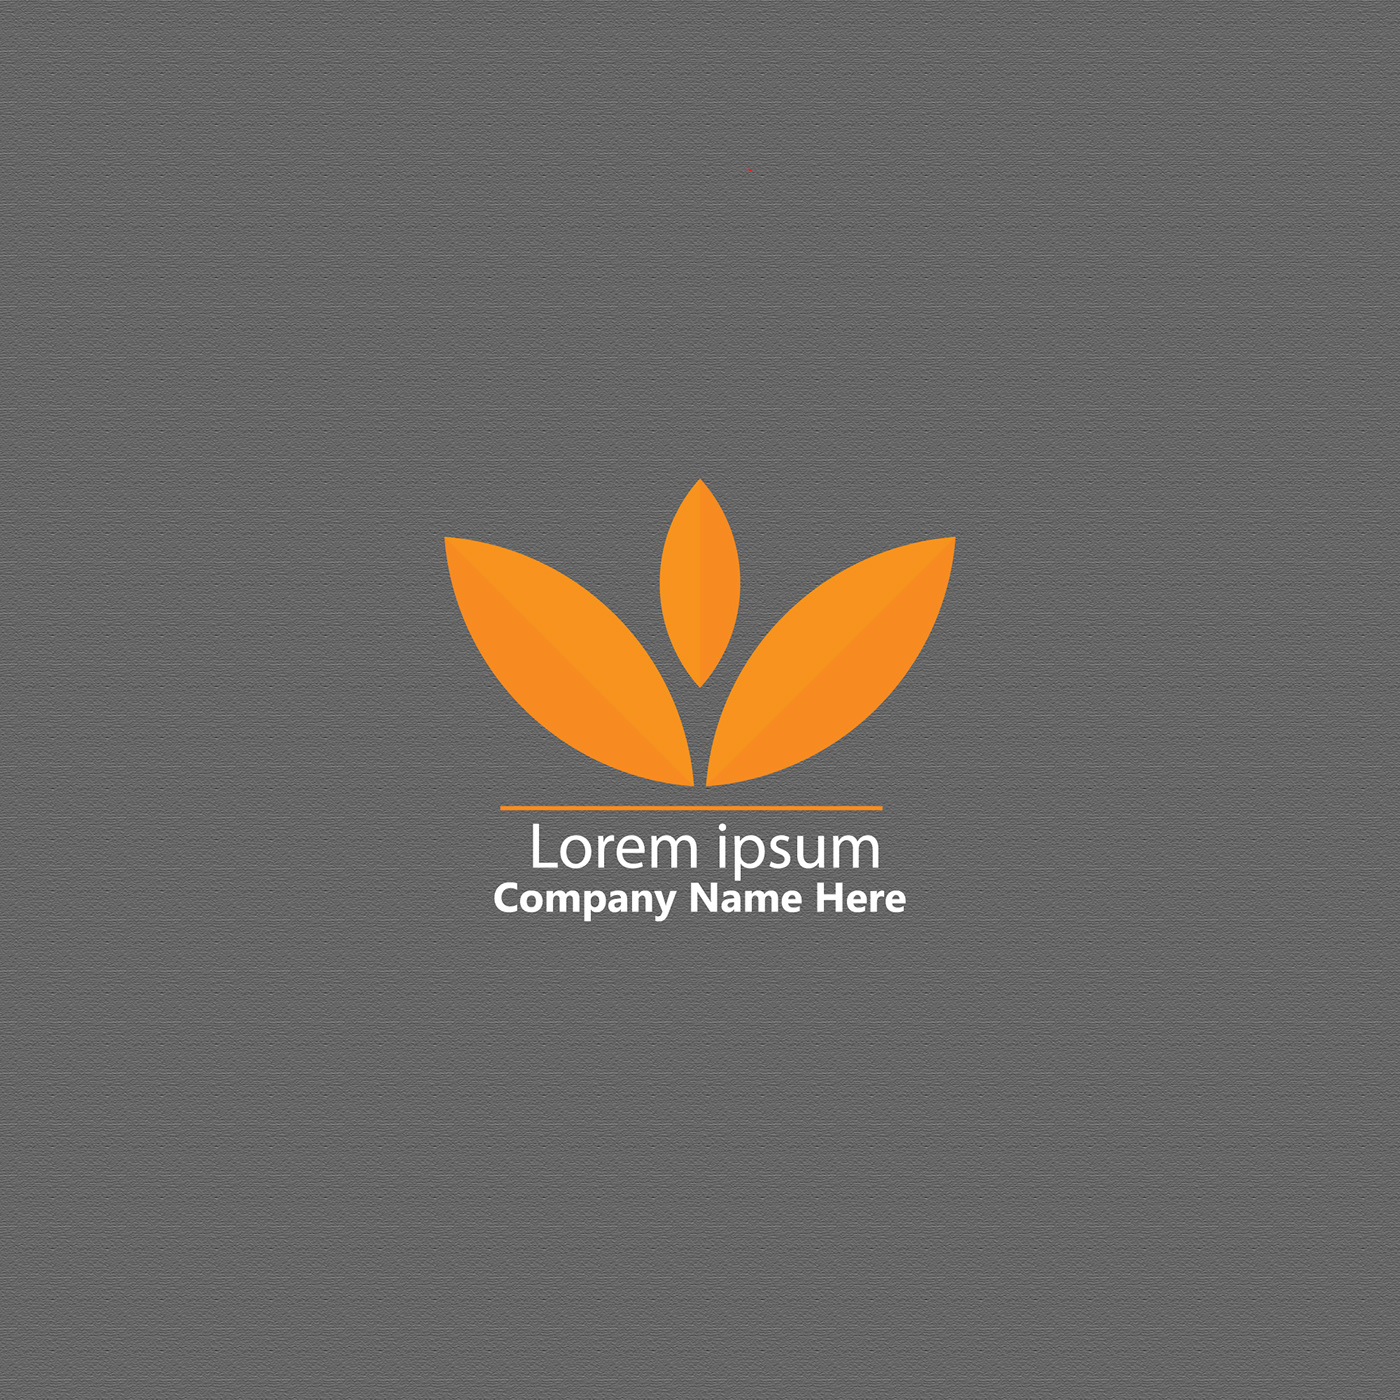 classic logo golden leaf leaf logo logo orange